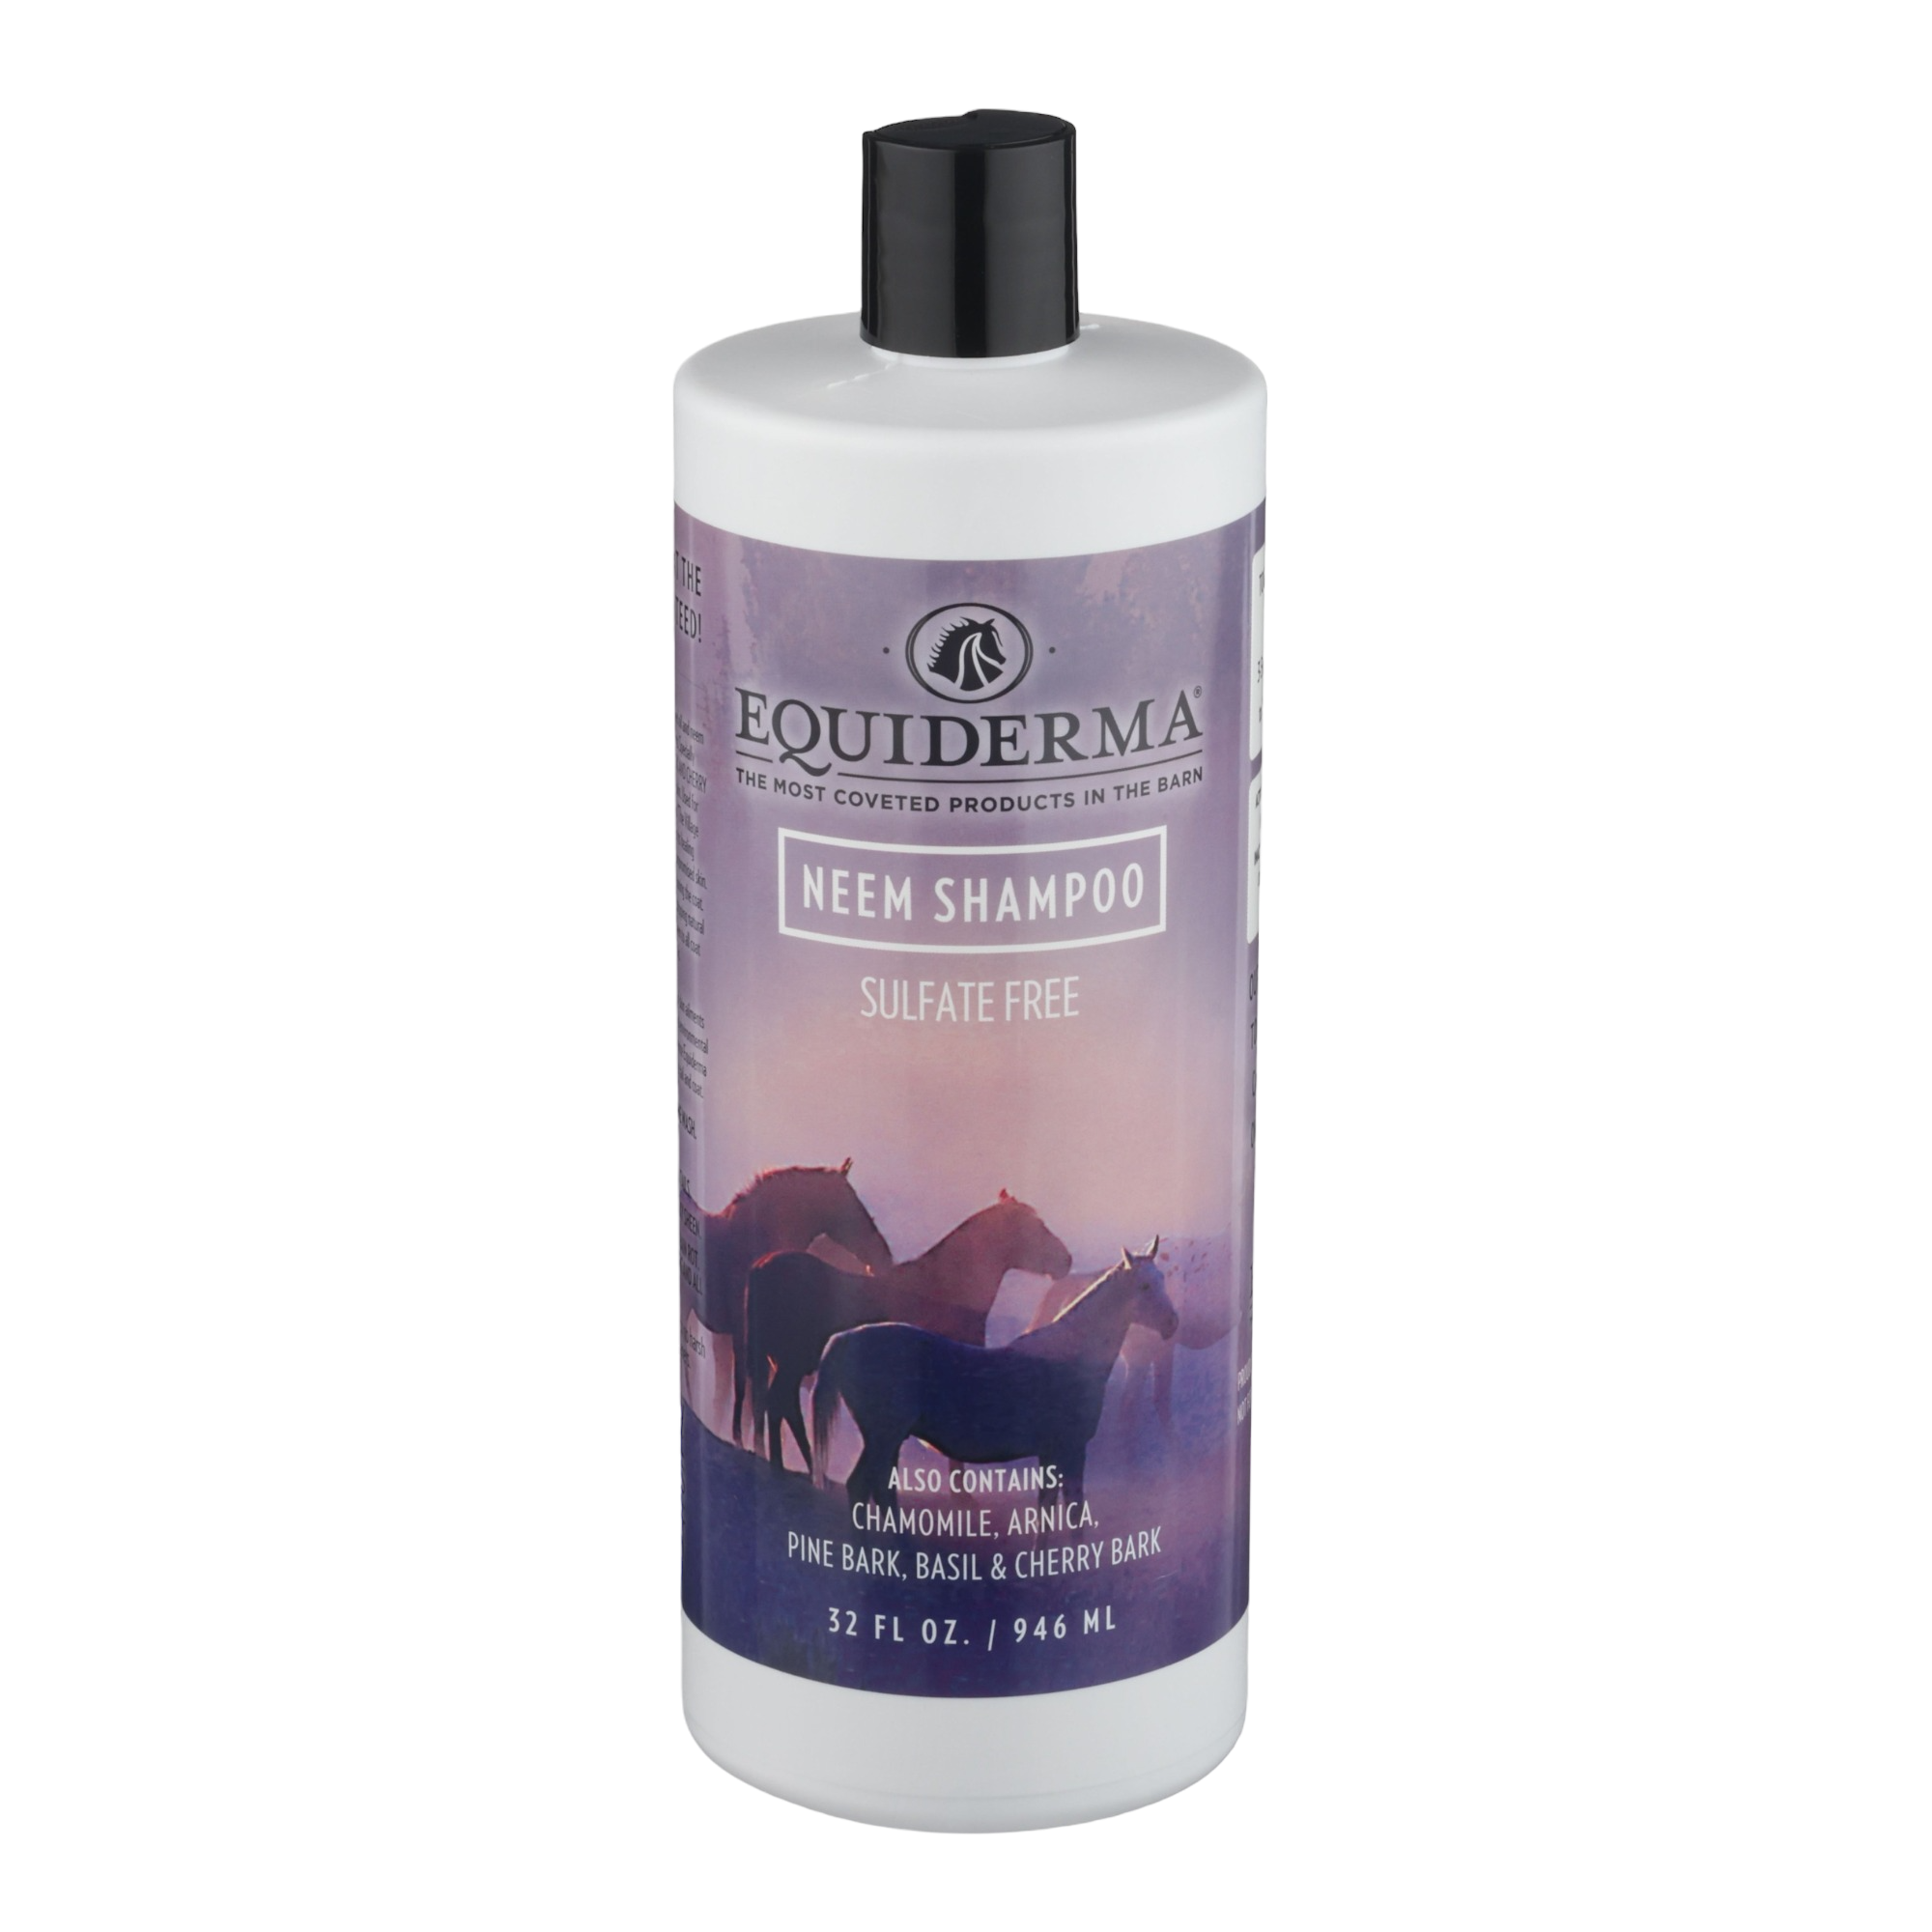 Polar læbe Anemone fisk Neem & Arnica Shampoo: Sulfate Free Shampoo for Horses | Equiderma